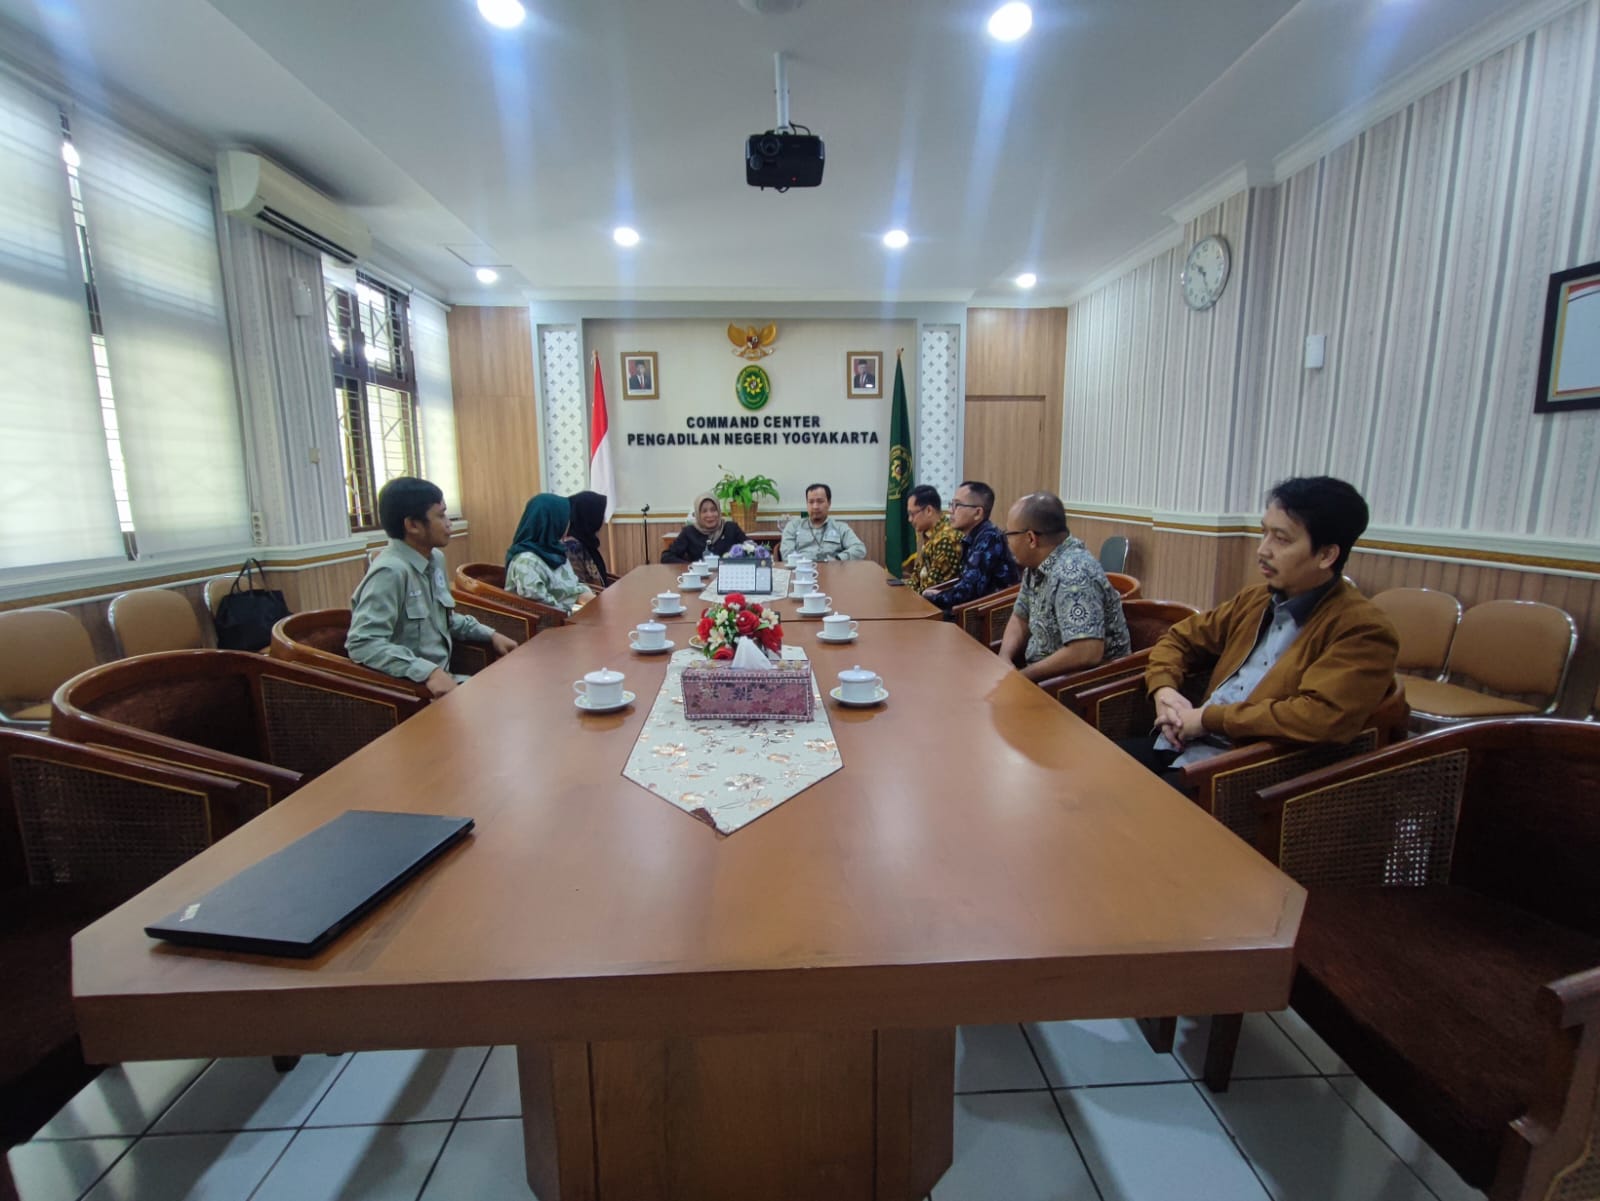 Pengadilan Negeri Yogyakarta Mendapatkan Kunjungan Kerja dari BPJS Kesehatan